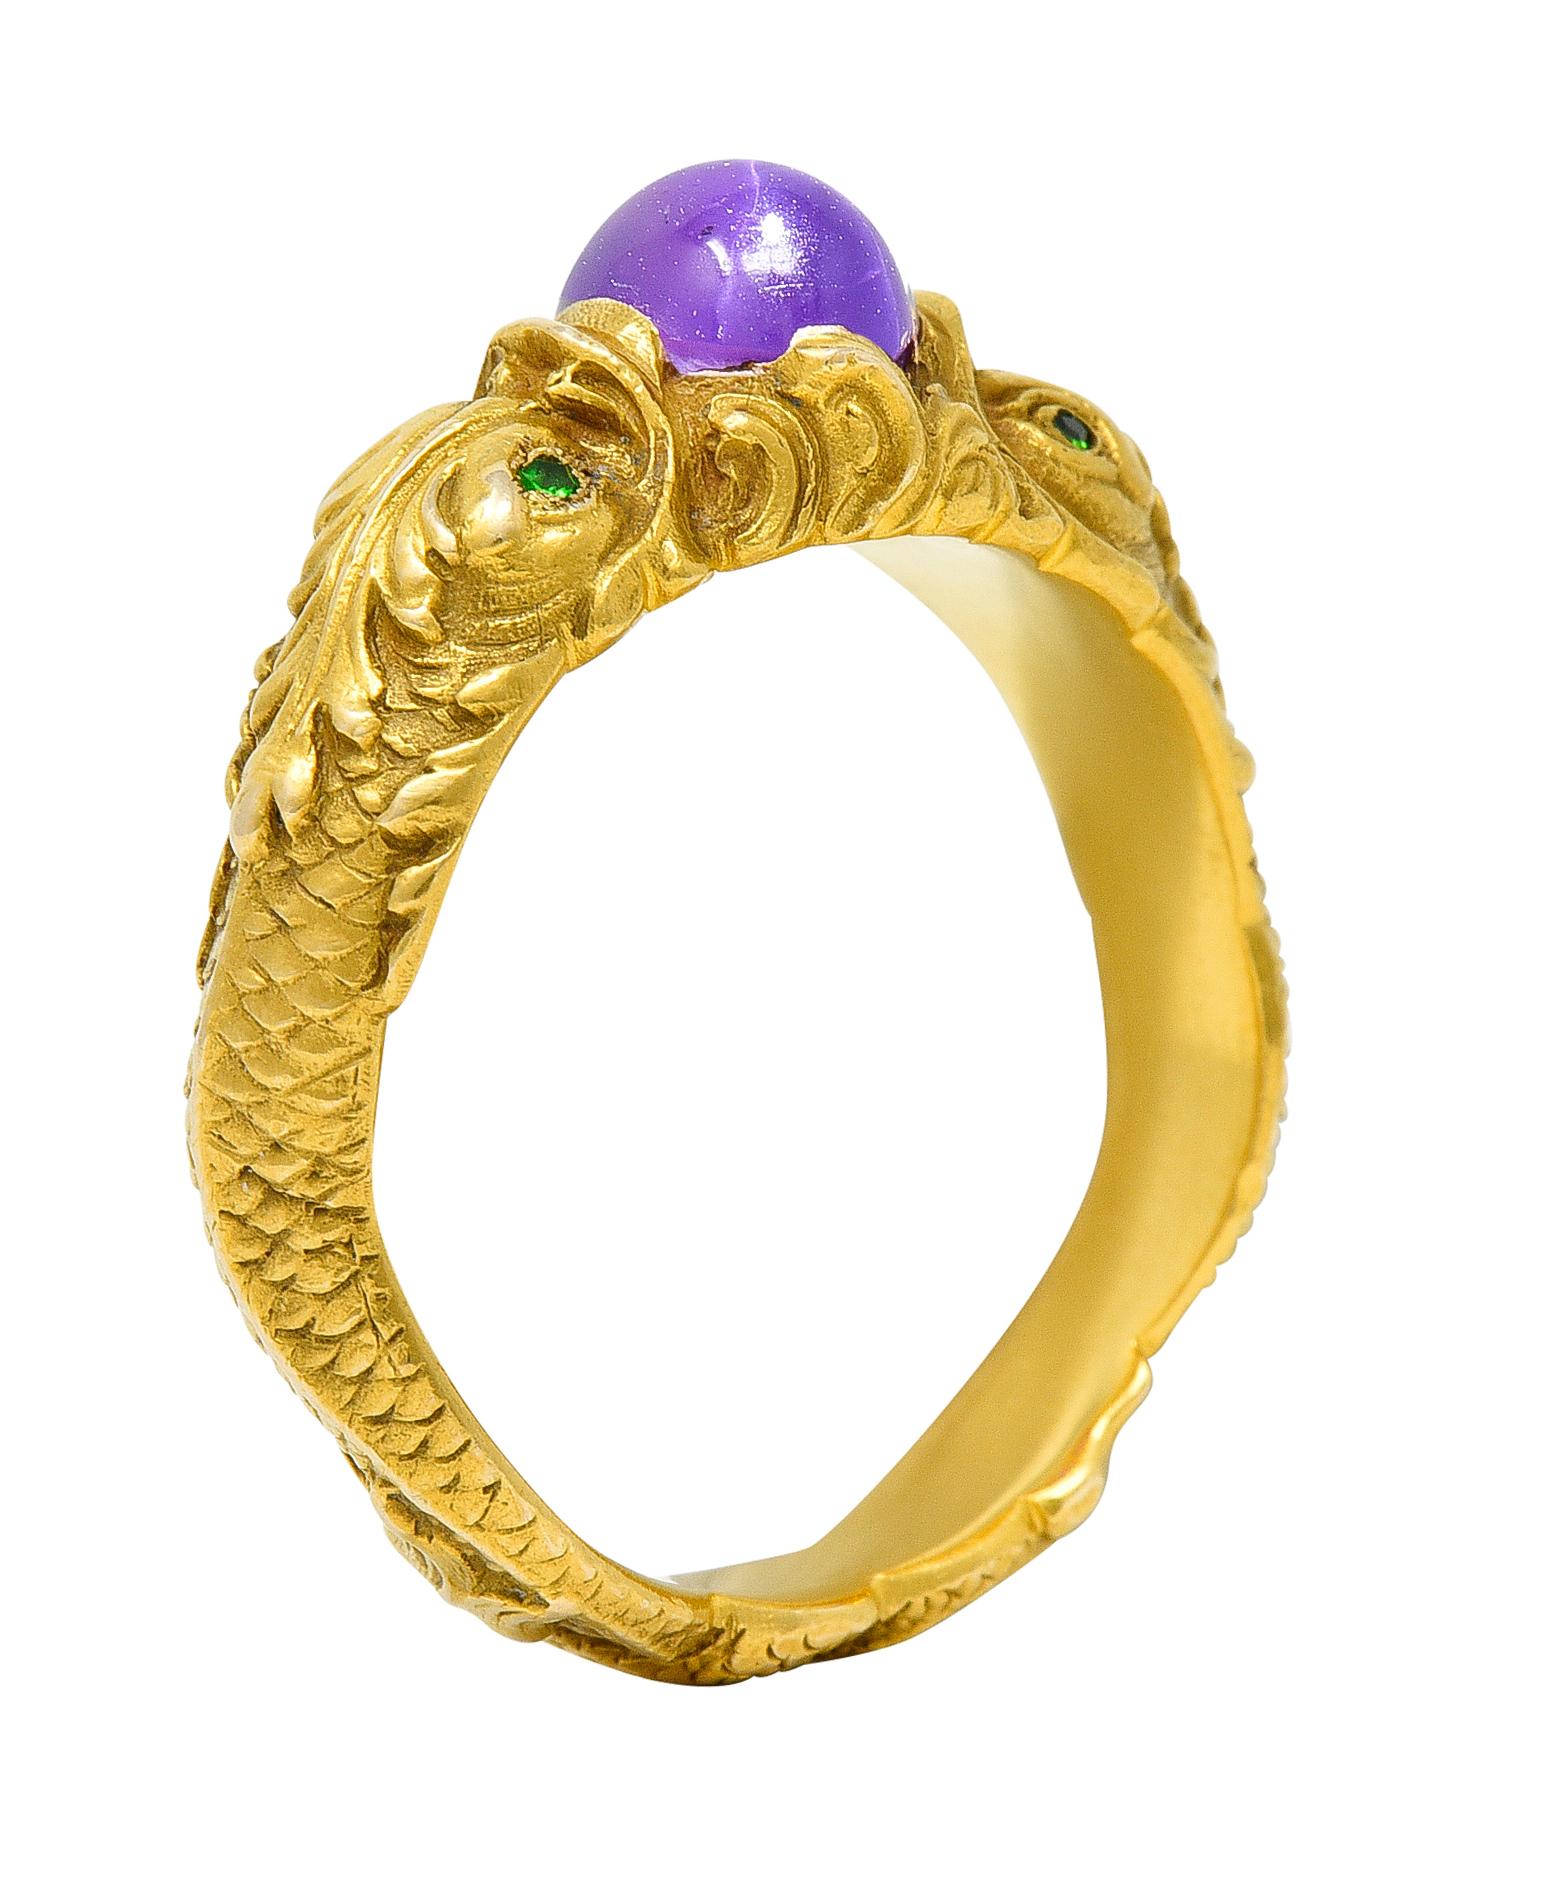 1890s Art Nouveau 2.68 Star Ruby Demantoid Garnet 14 Karat Gold Koi Fish Ring For Sale 5